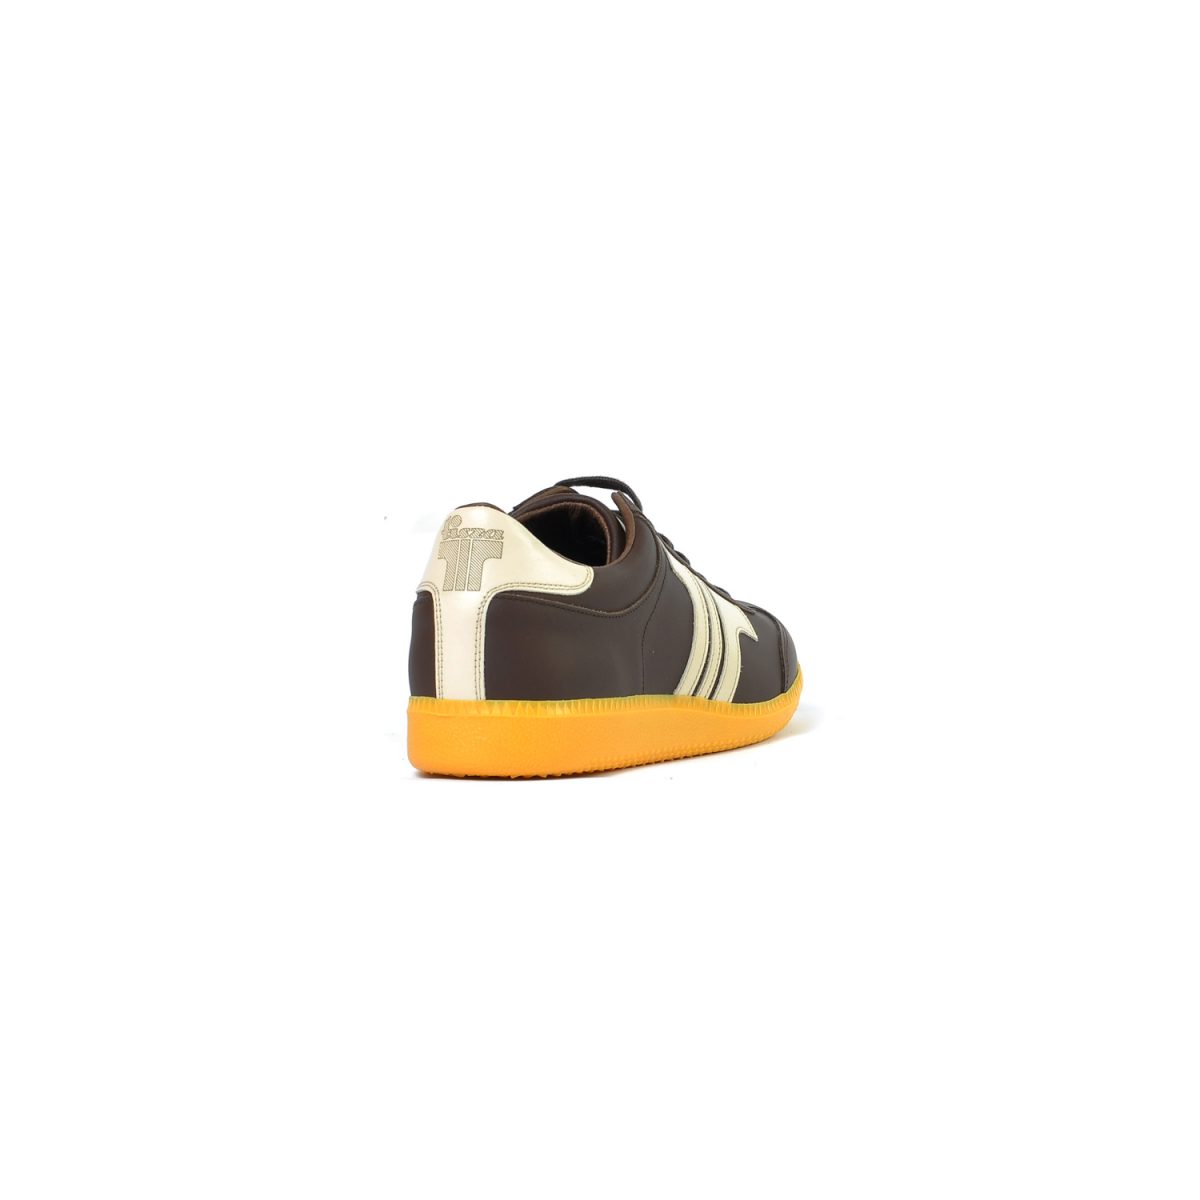 Tisza shoes - Compakt - Brown-beige